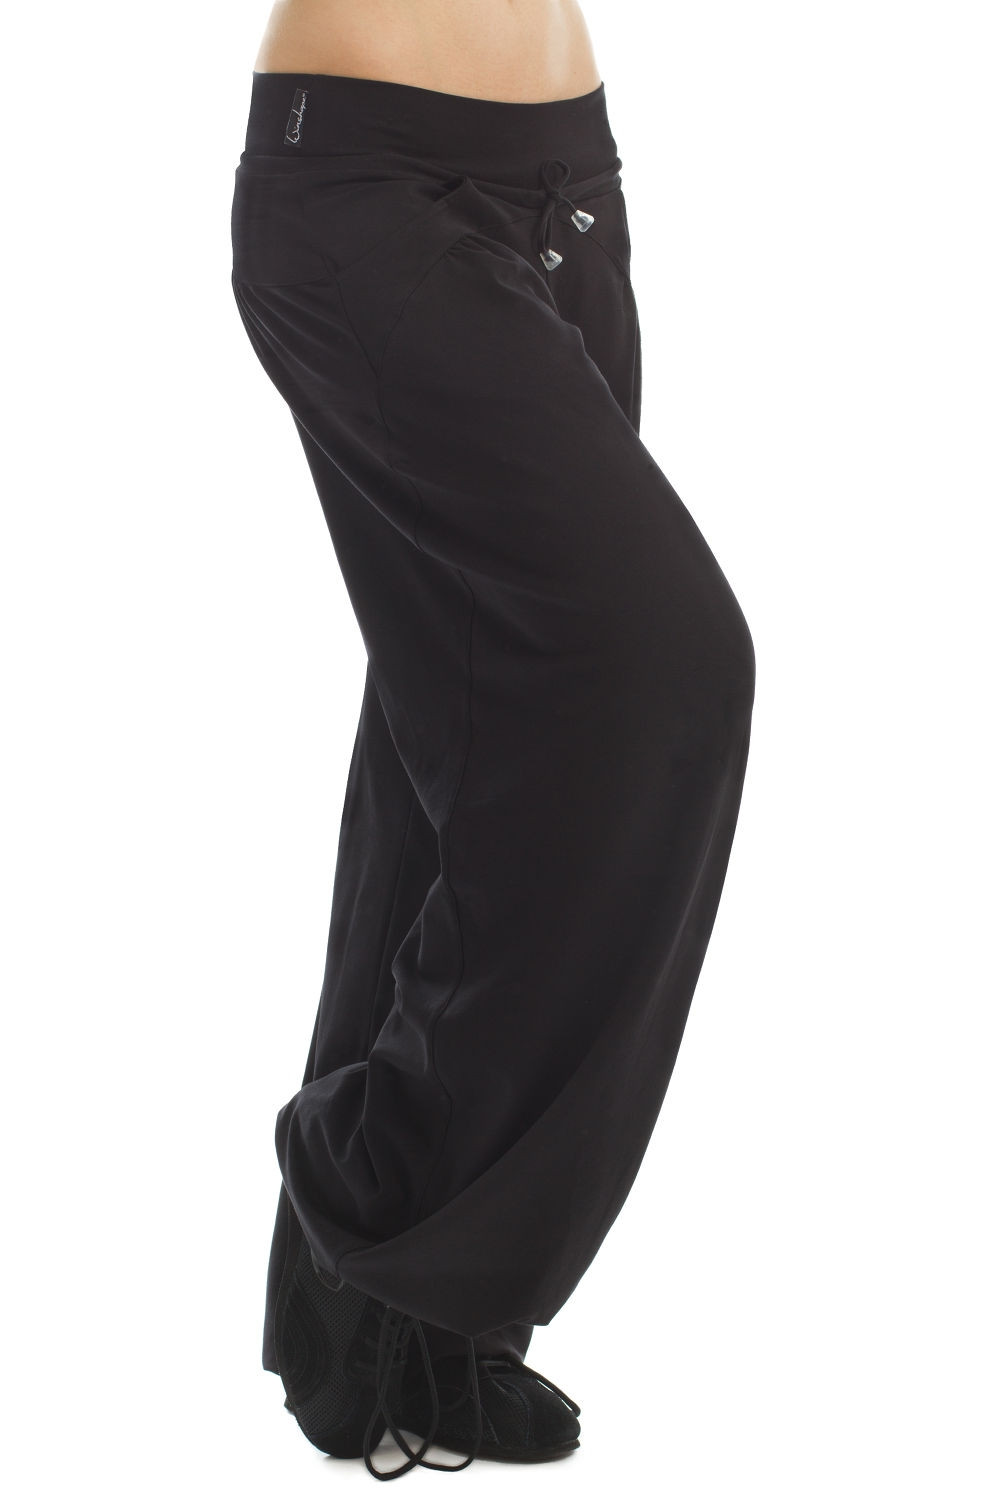 Trousers WTE3 Winshape Style Baggy - Black, Dance